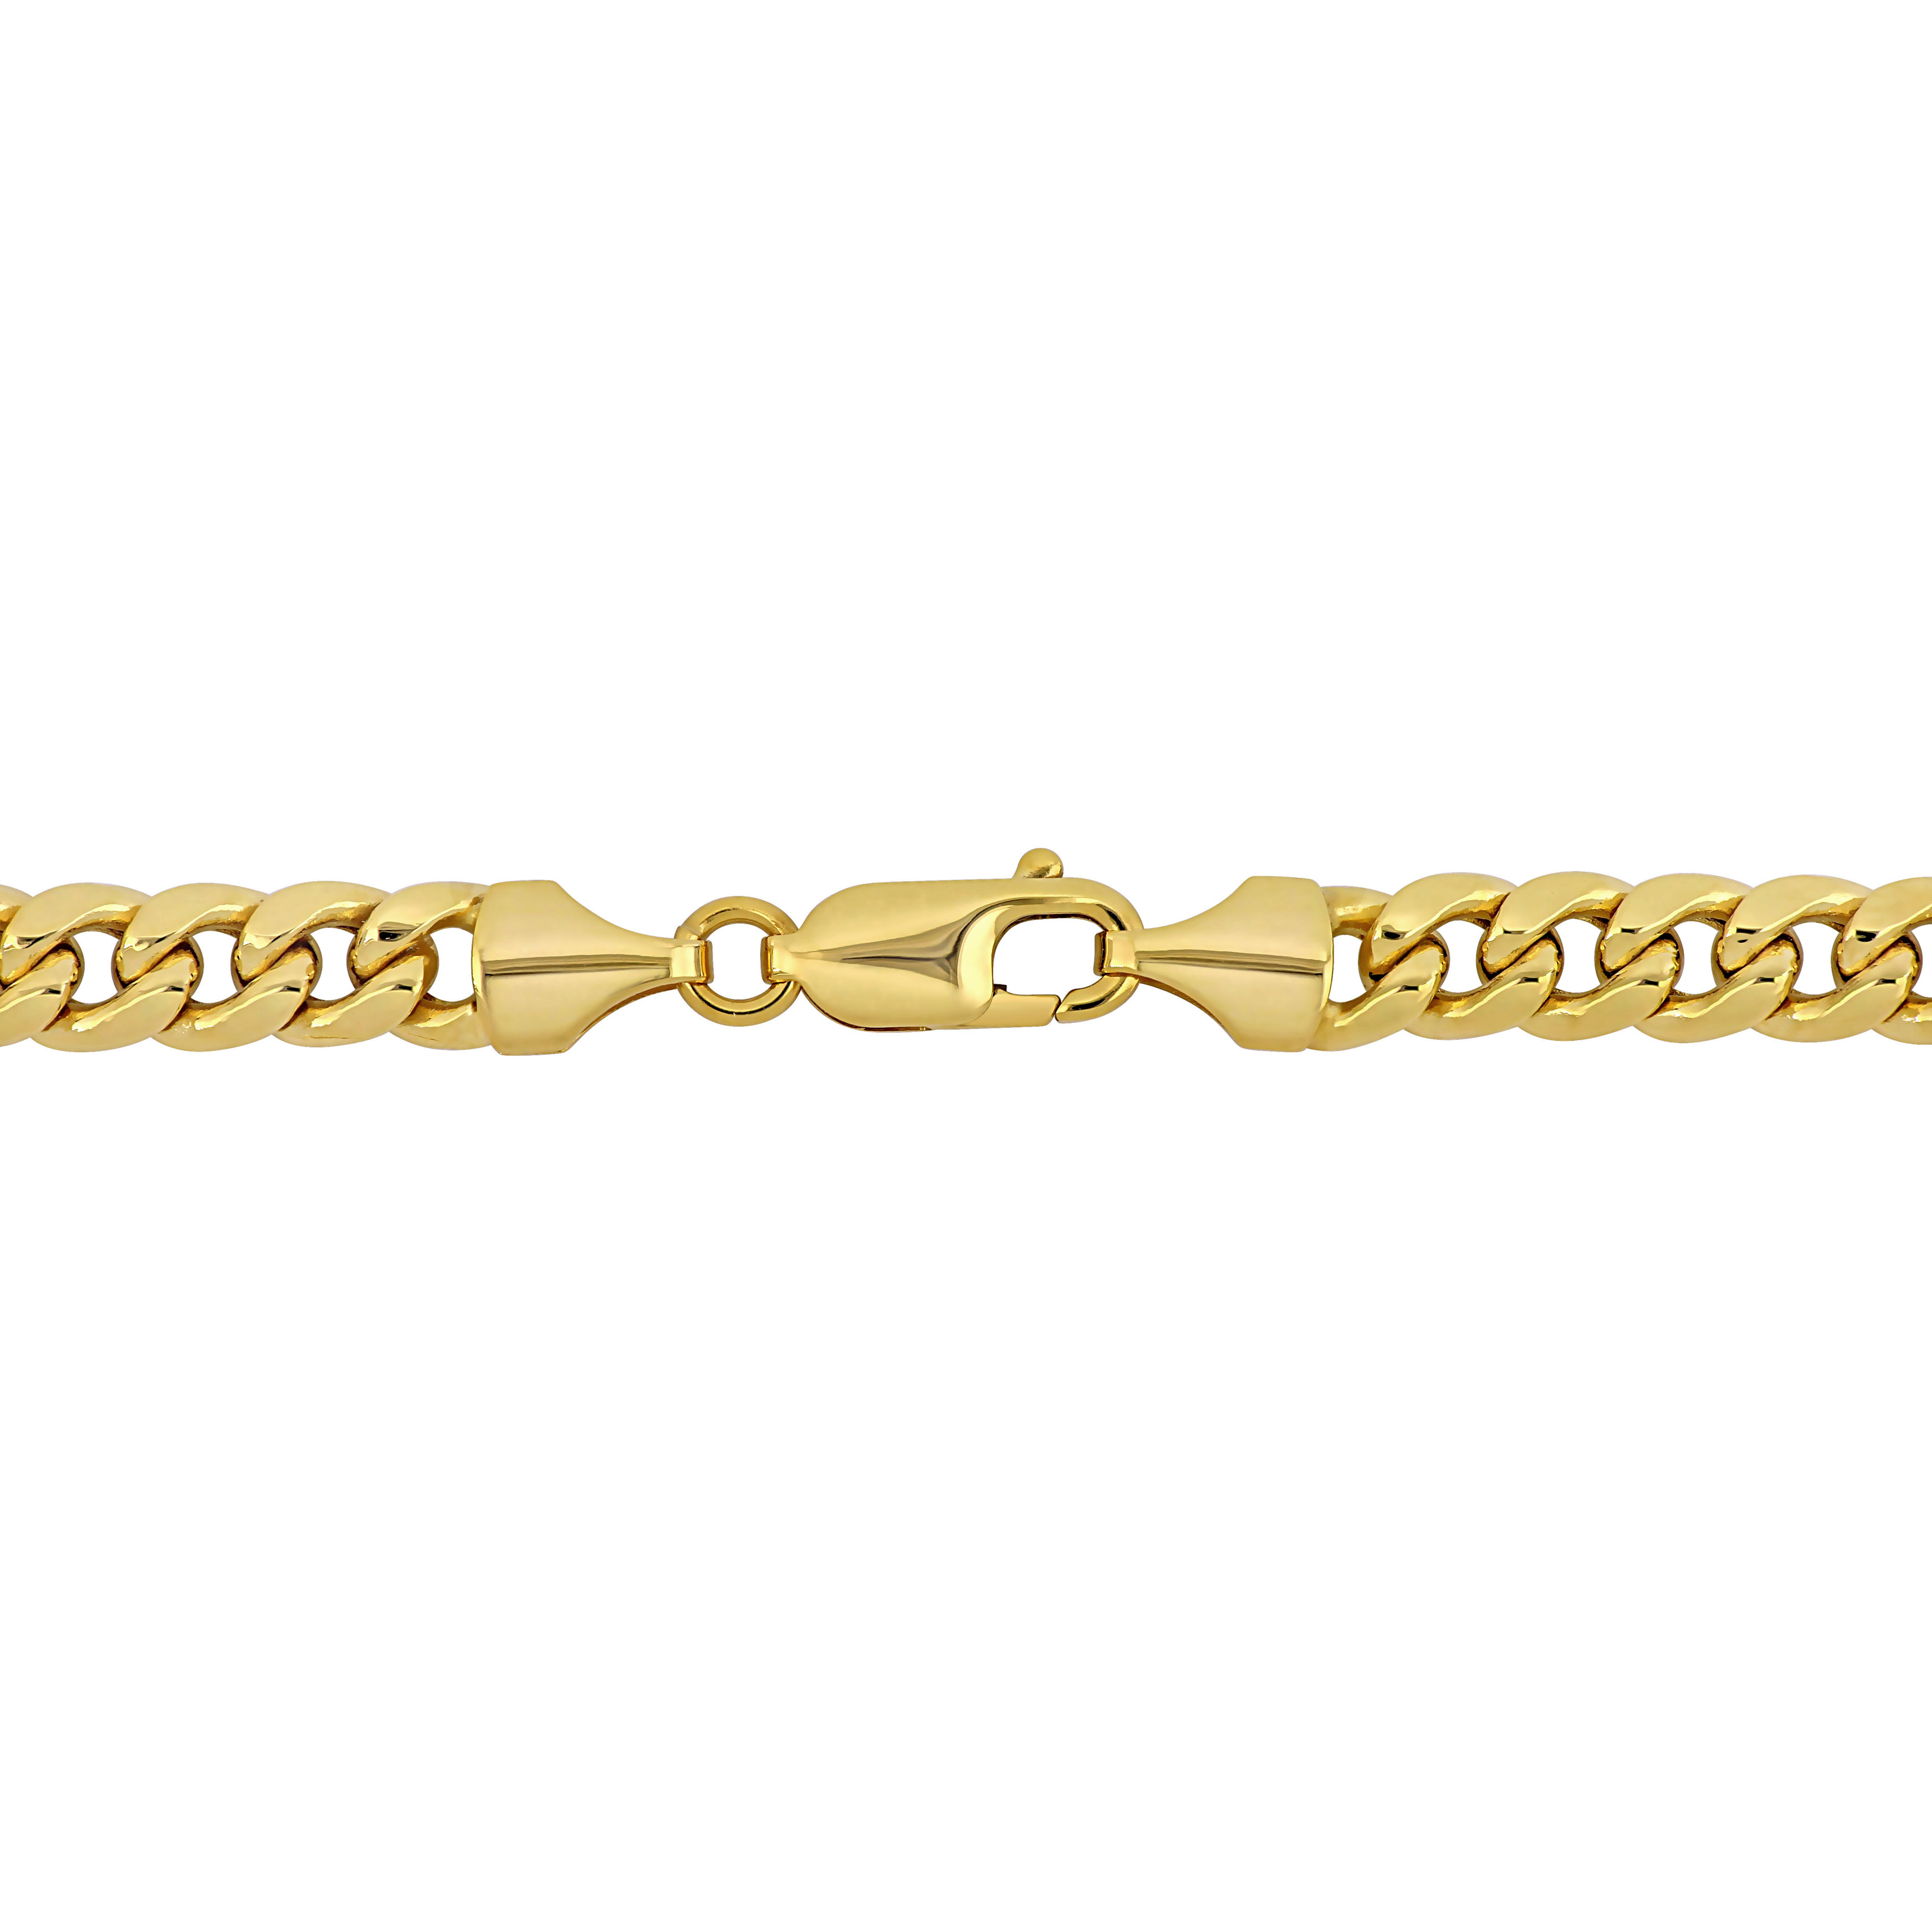 6.15mm Miami Cuban Link Chain Bracelet in 10k Yellow Gold - 9 in.